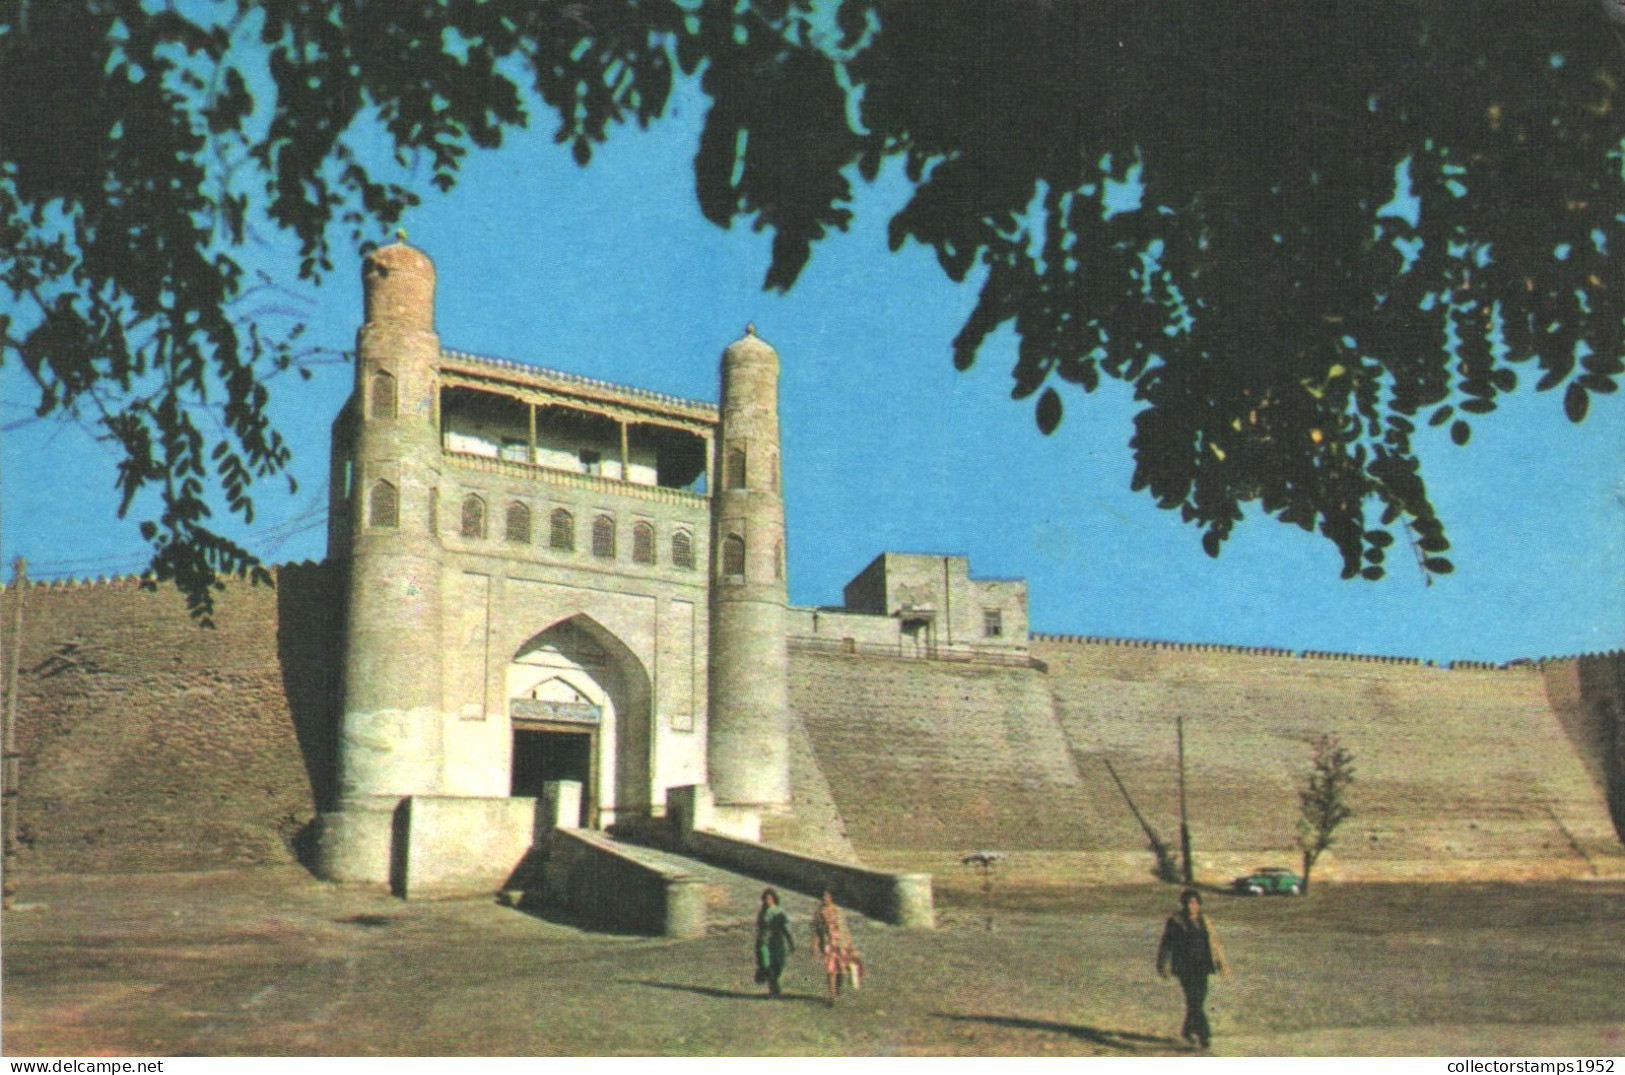 BUKHARA, THE ARK, GATE, ARCHITECTURE, UZBEKISTAN, POSTCARD - Uzbekistan